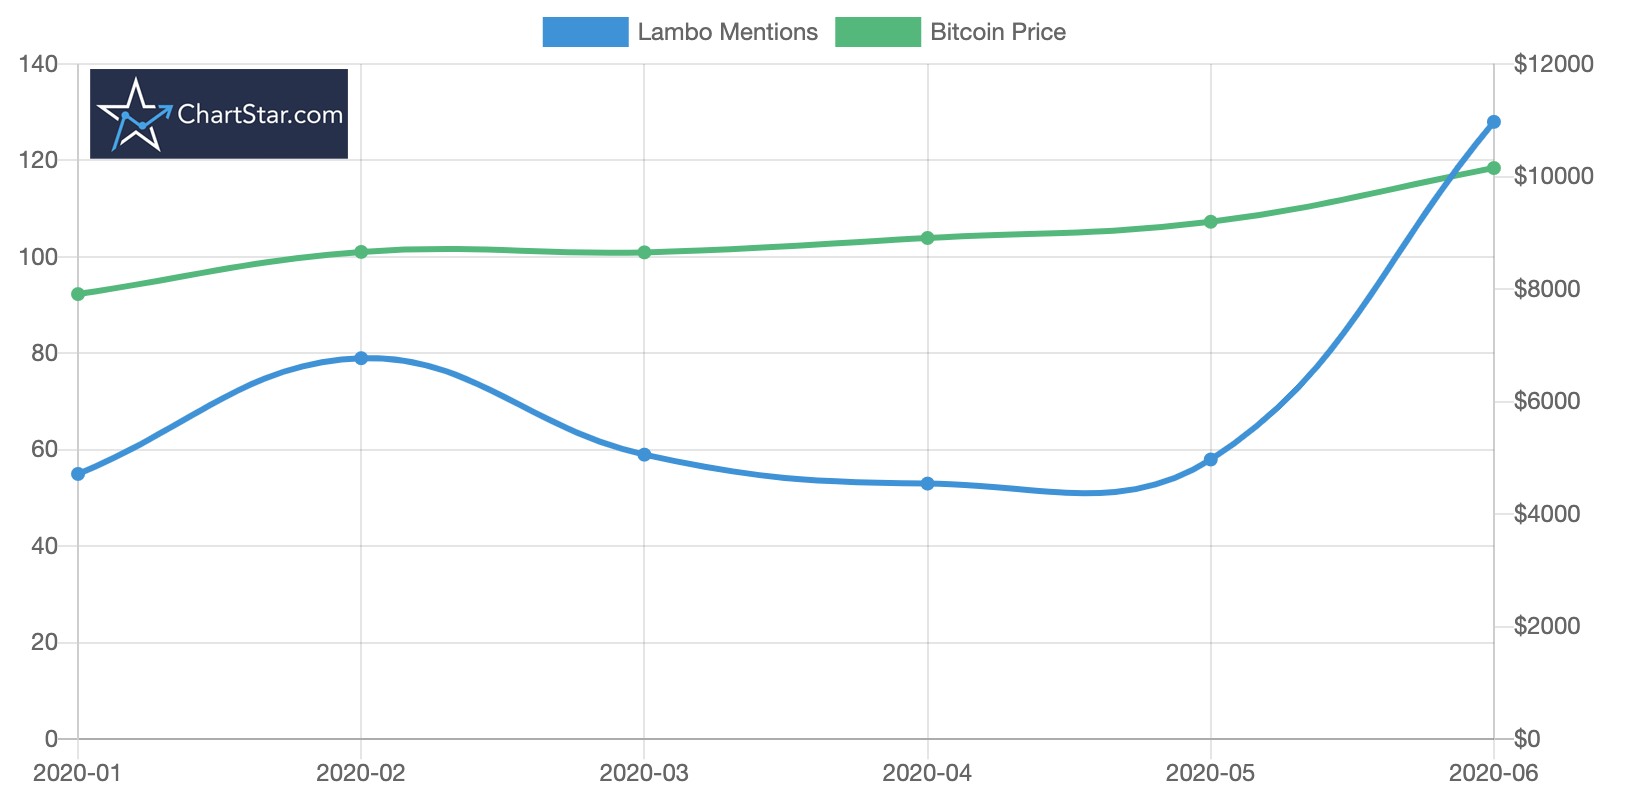 Bitcoin Lambo 2020